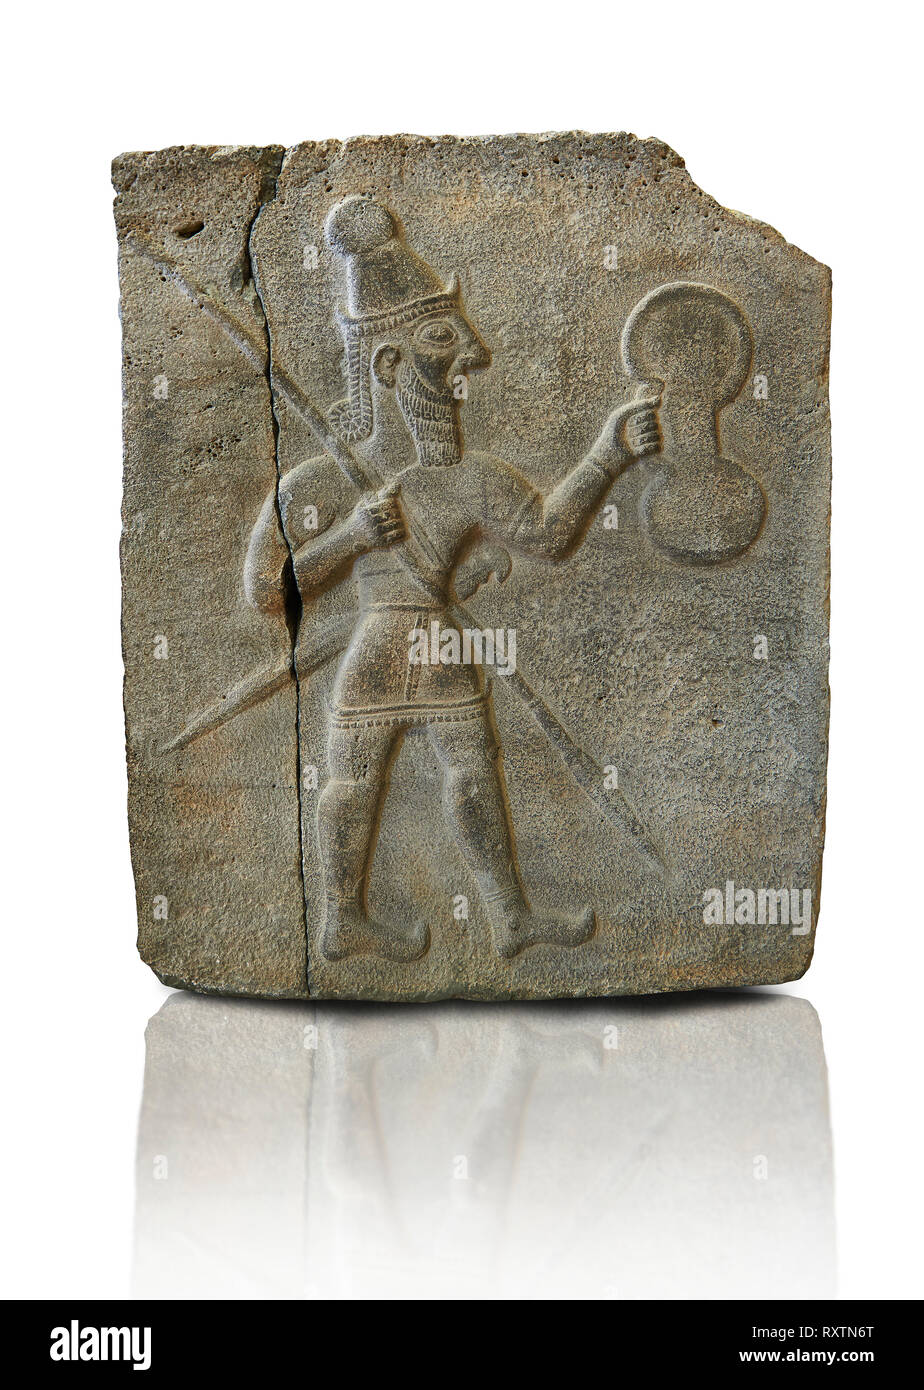 10th - 8th century BC stone Neo-Hittite/ Aramaean Orthostats from the city of Sam'al (Hittite: Yadiya) near Zincirli Höyük in the Anti-Taurus Mountain Stock Photo